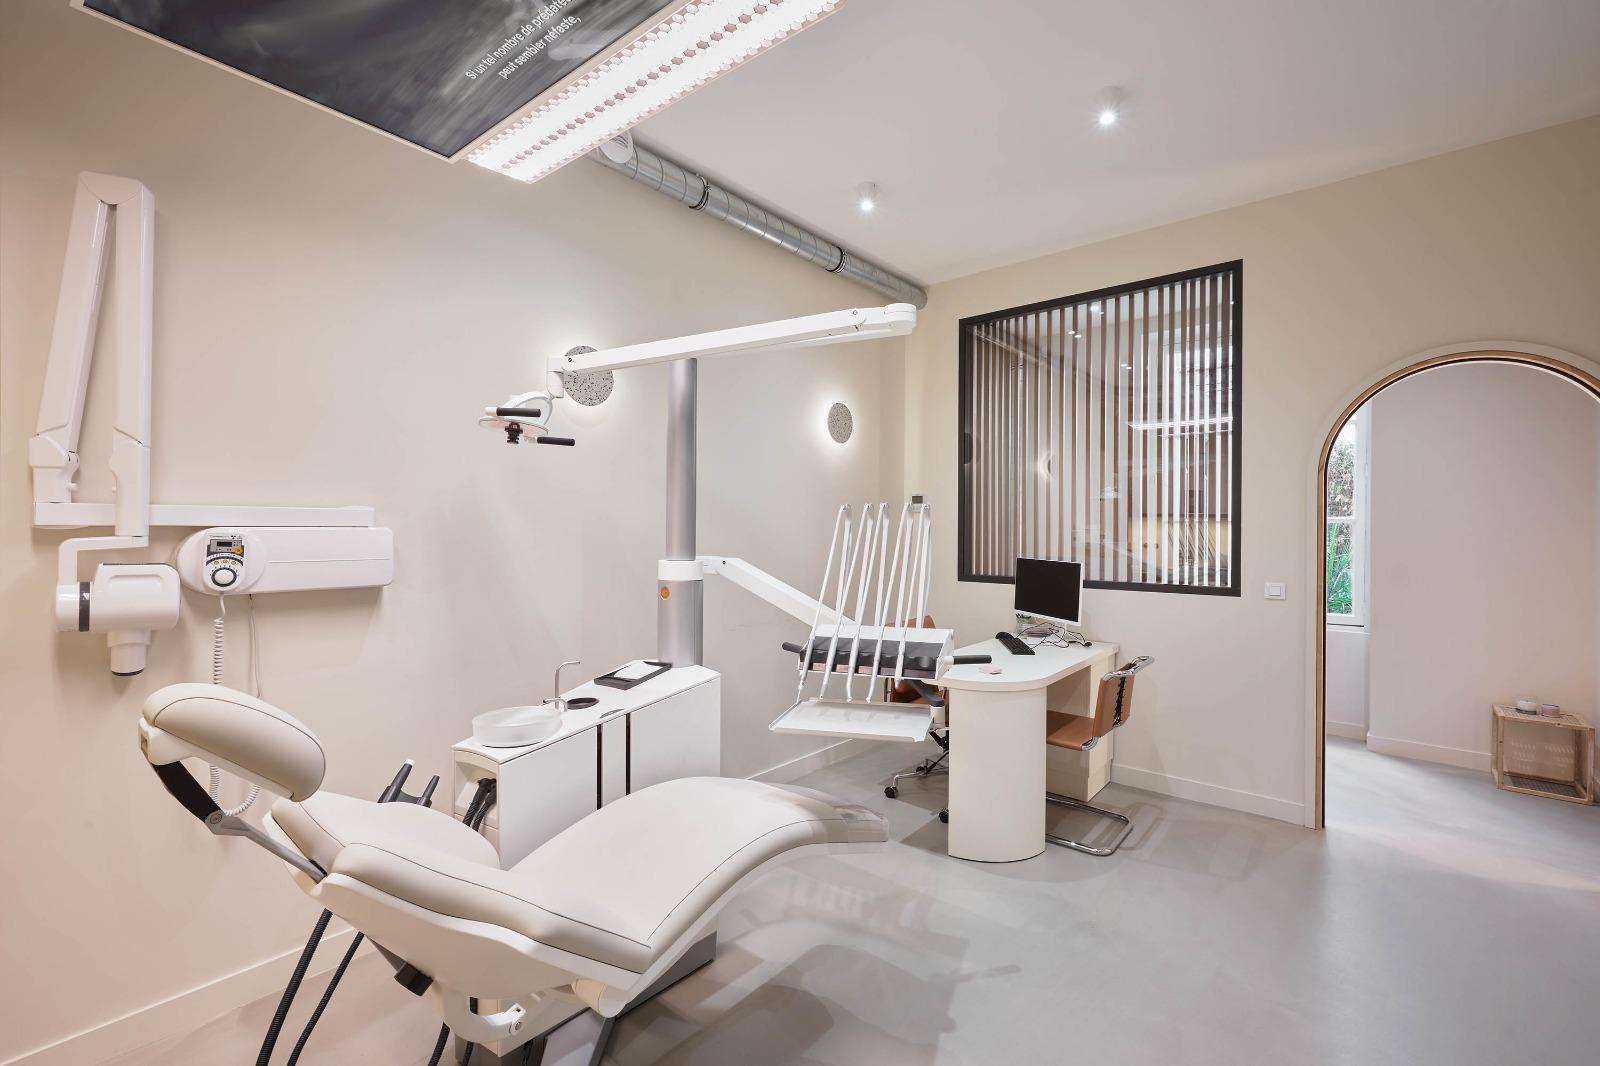 paris dental studios : notre avis